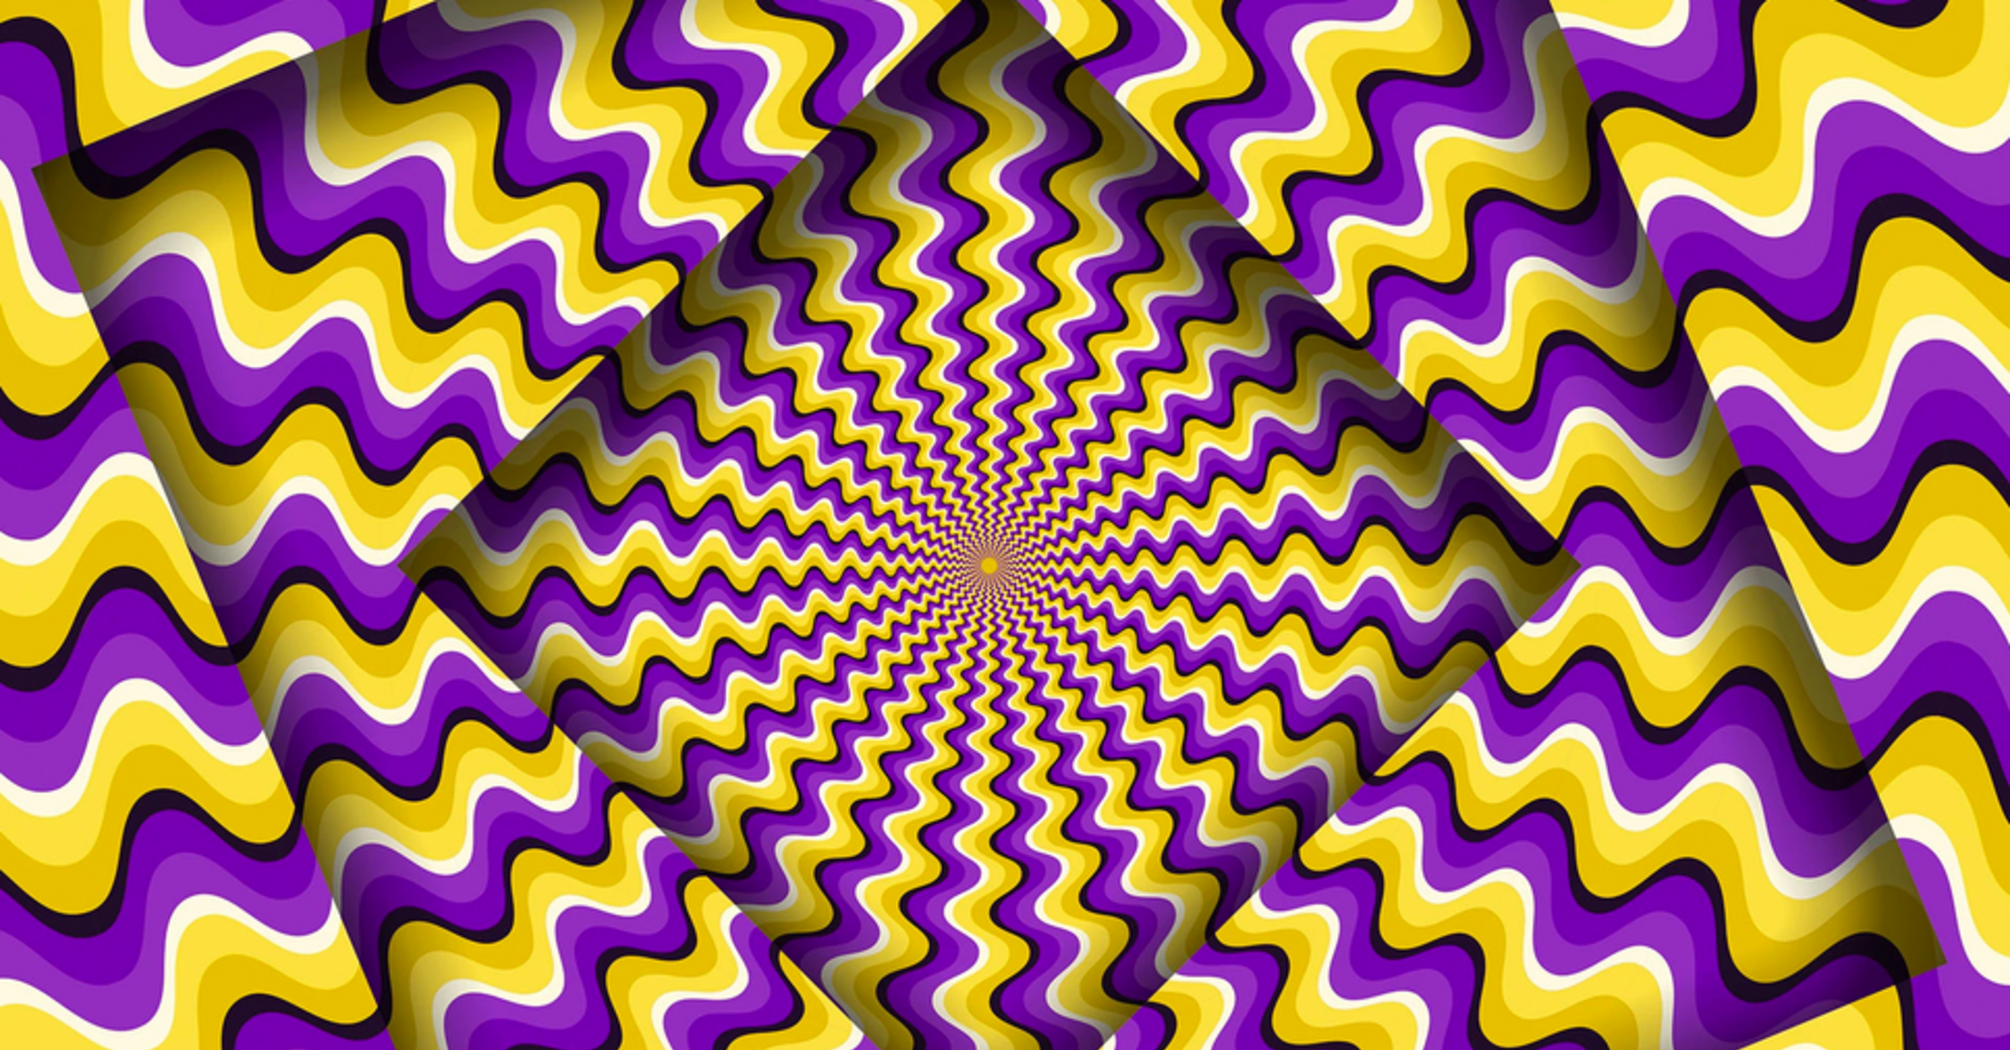 This vibrant optical illusion is hypnotic